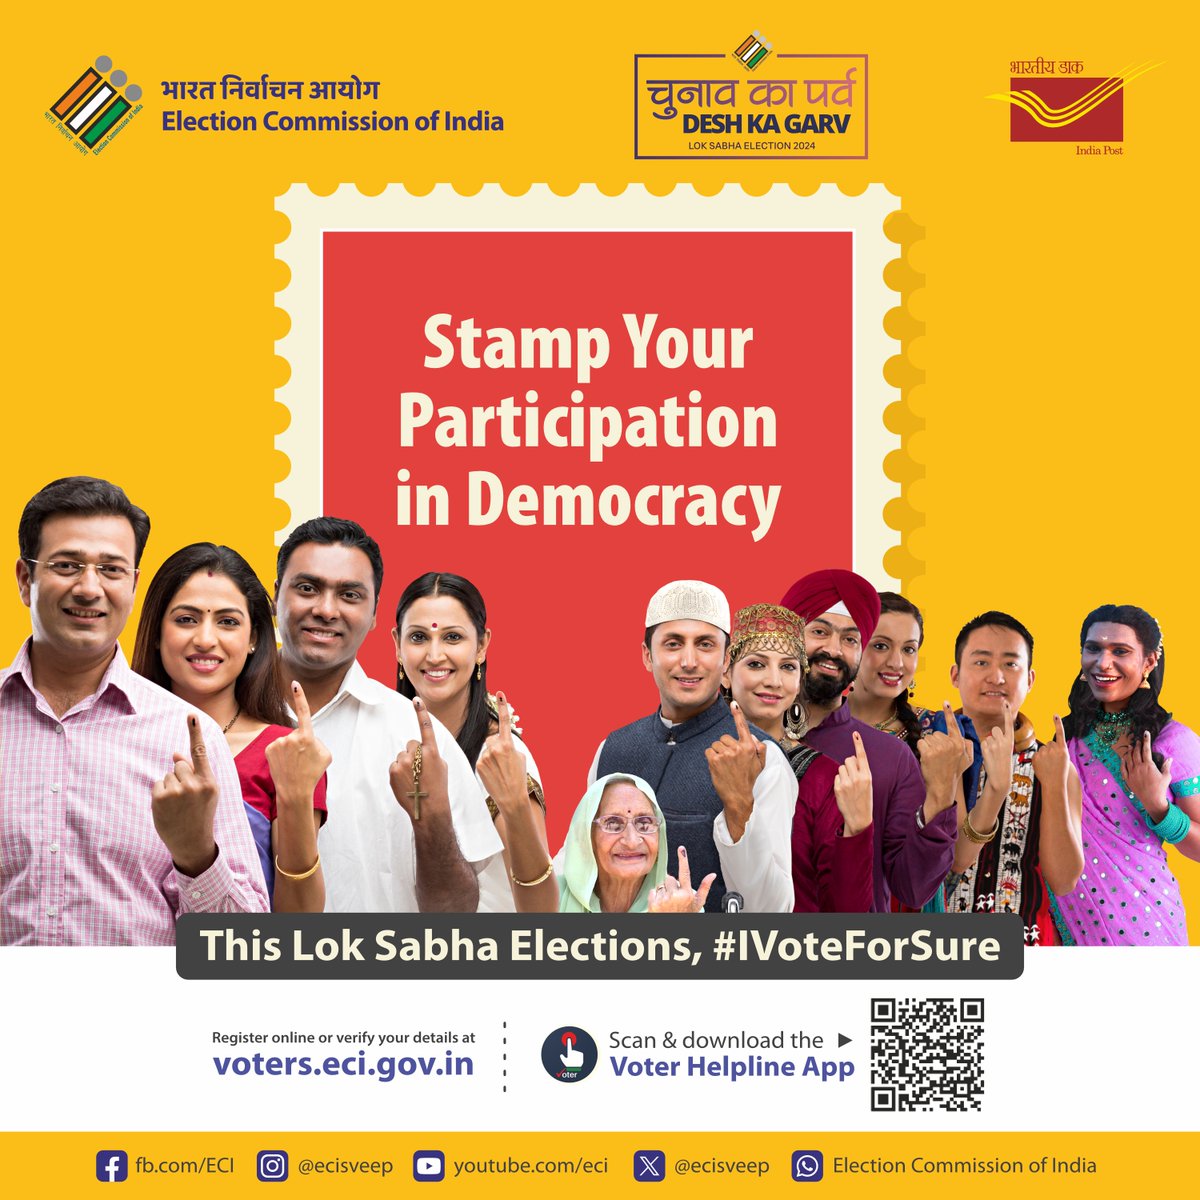 Don't  forget to cast your vote and celebrate the festival of elections with pride.
Chunav ka  Parv, Desh ka Garv
#IVoteForSure #MeraVoteDeshkeLiye 
@IndiaPostOffice @ECISVEEP @DDNewslive @airnewsalerts @PIB_India